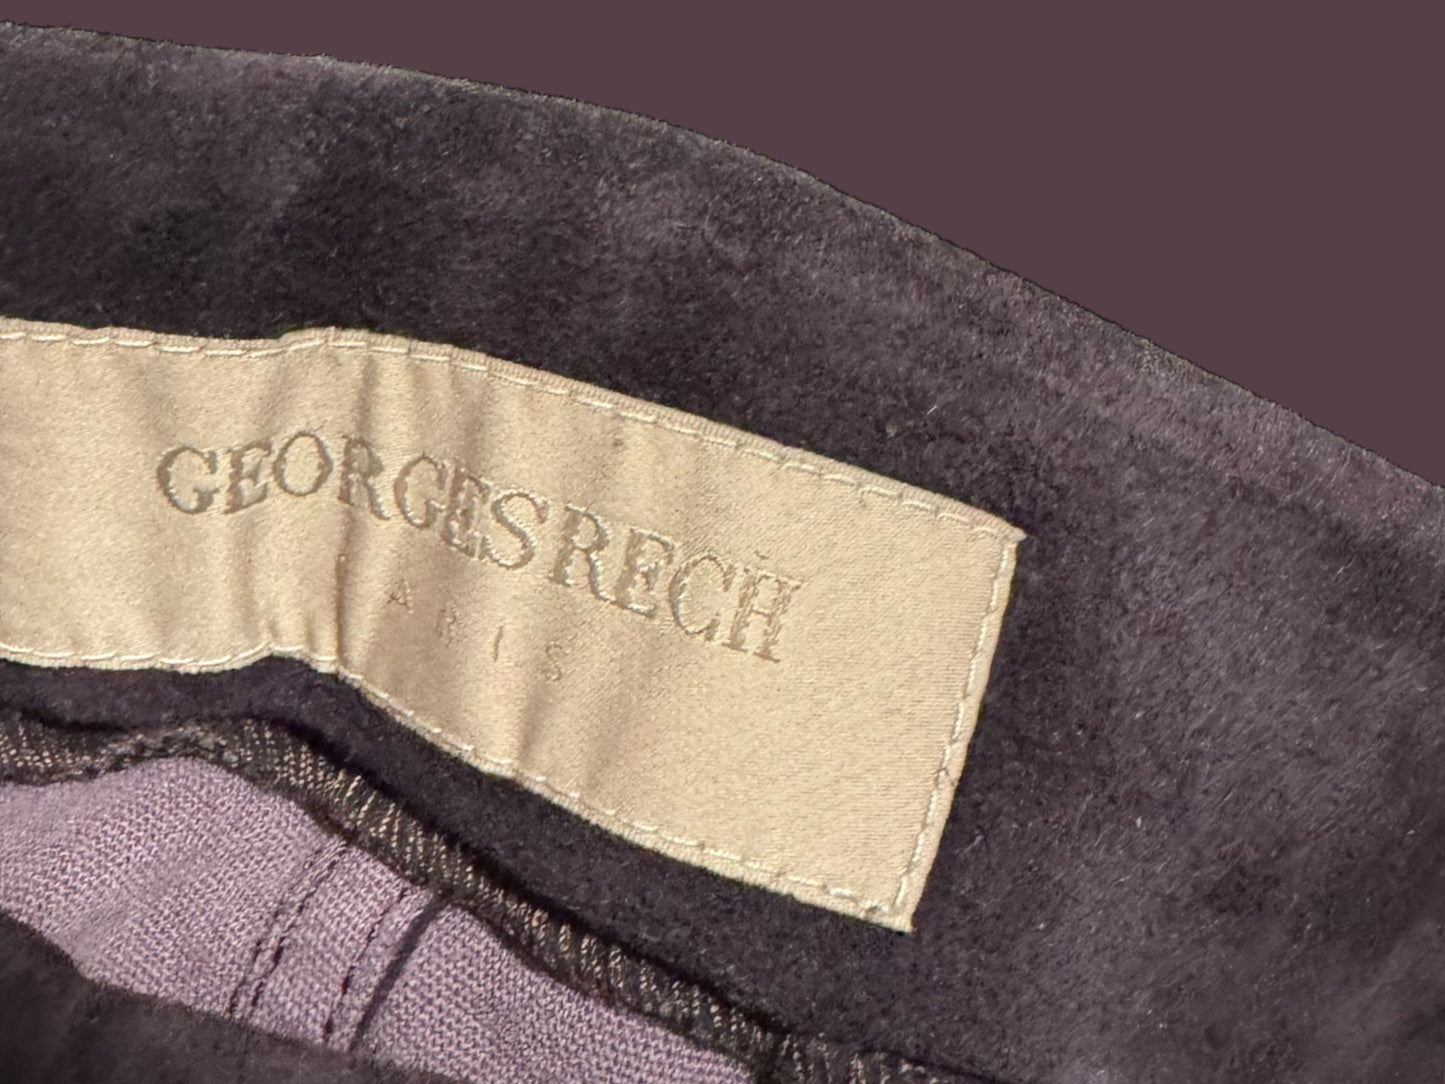 GEORGES RECH purple suede pants size xs